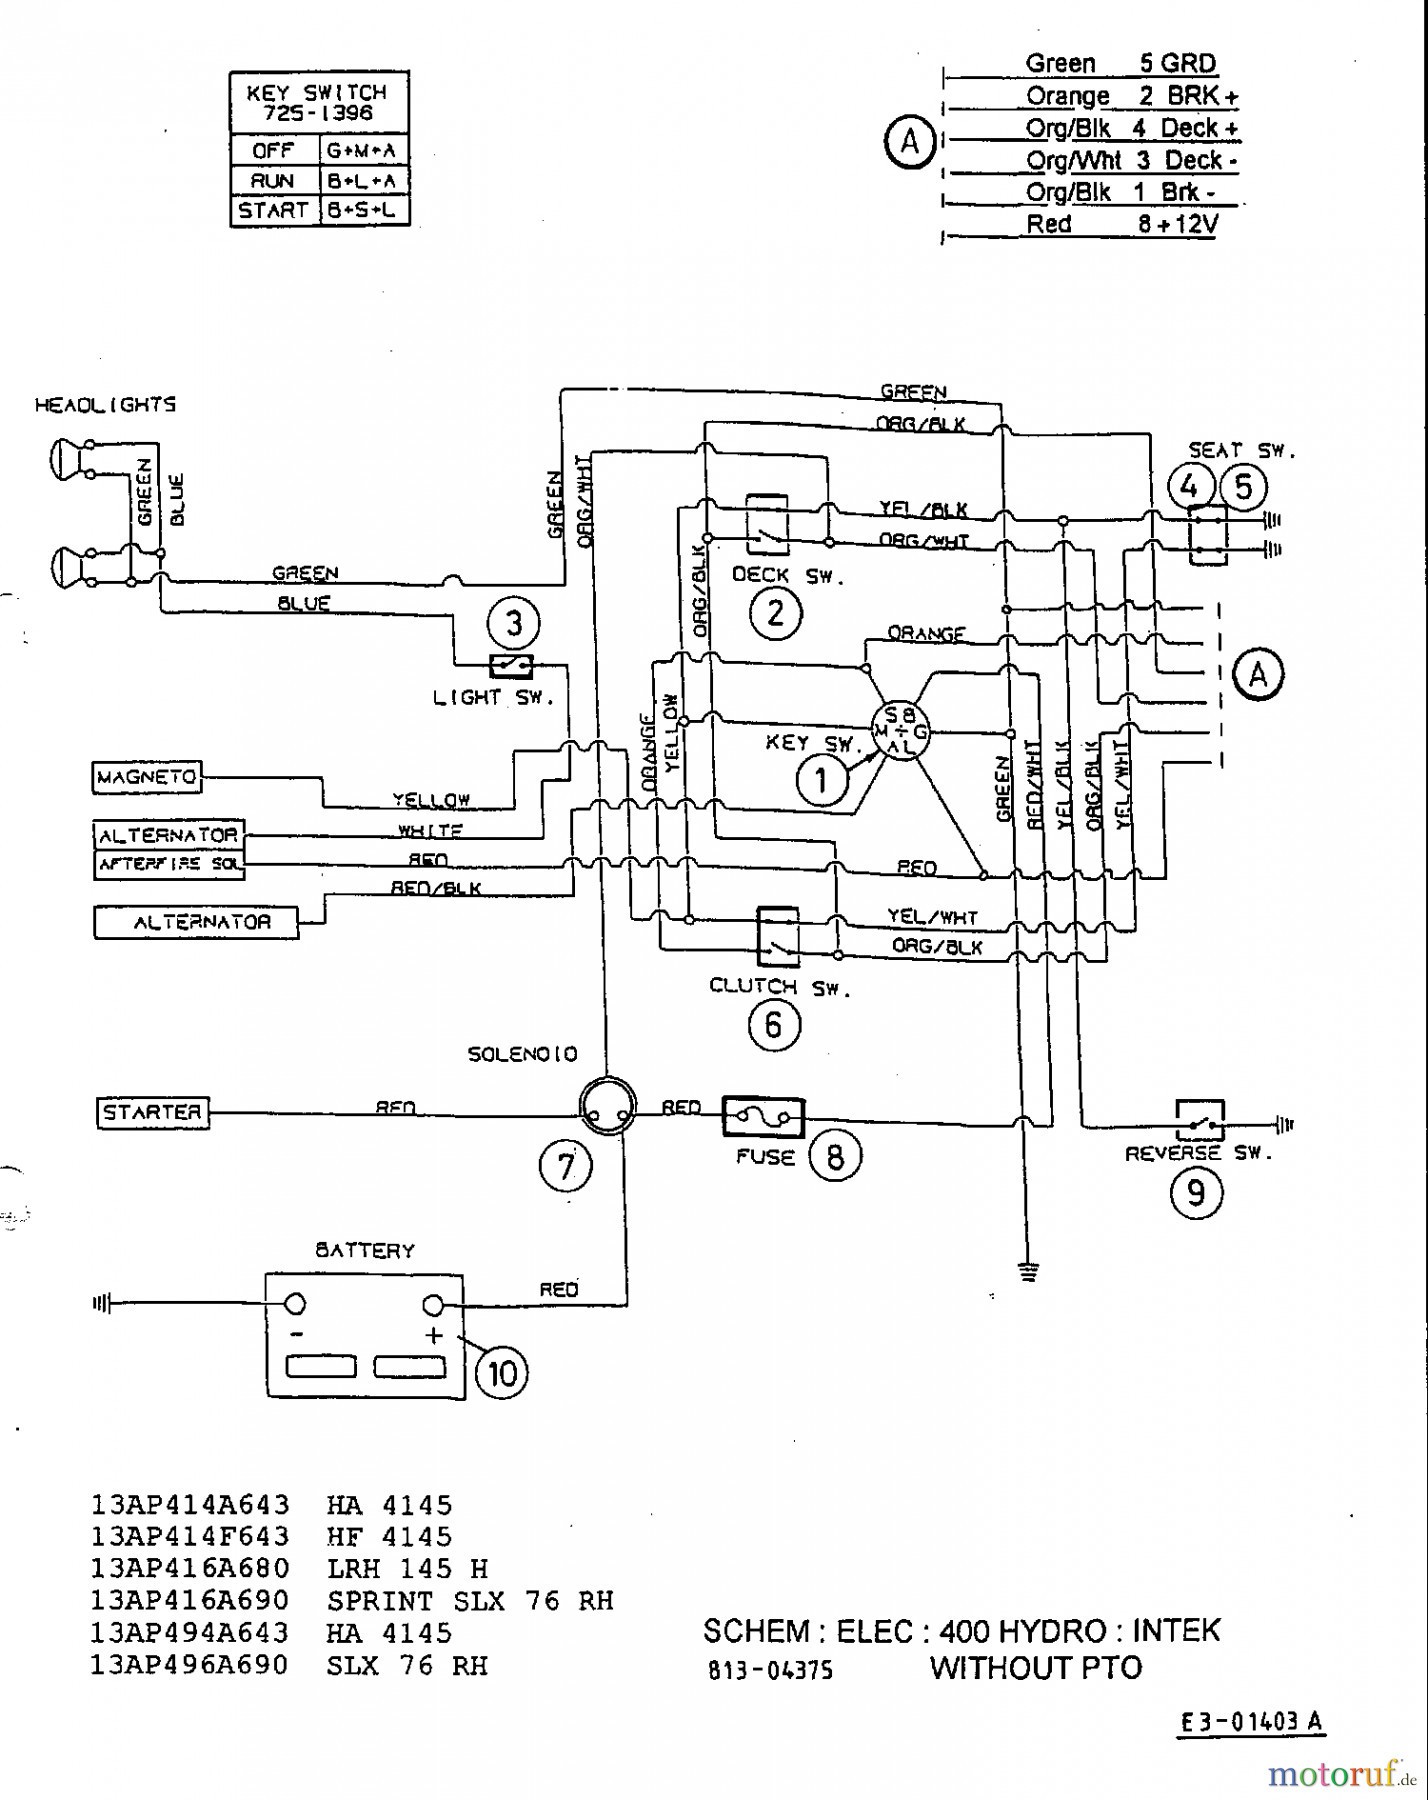 pt cruiser schematics submited images pic2fly wire center u2022 rh designjungle co 2005 Chrysler PT Cruiser Problems 2005 PT Cruiser Wiring Diagram